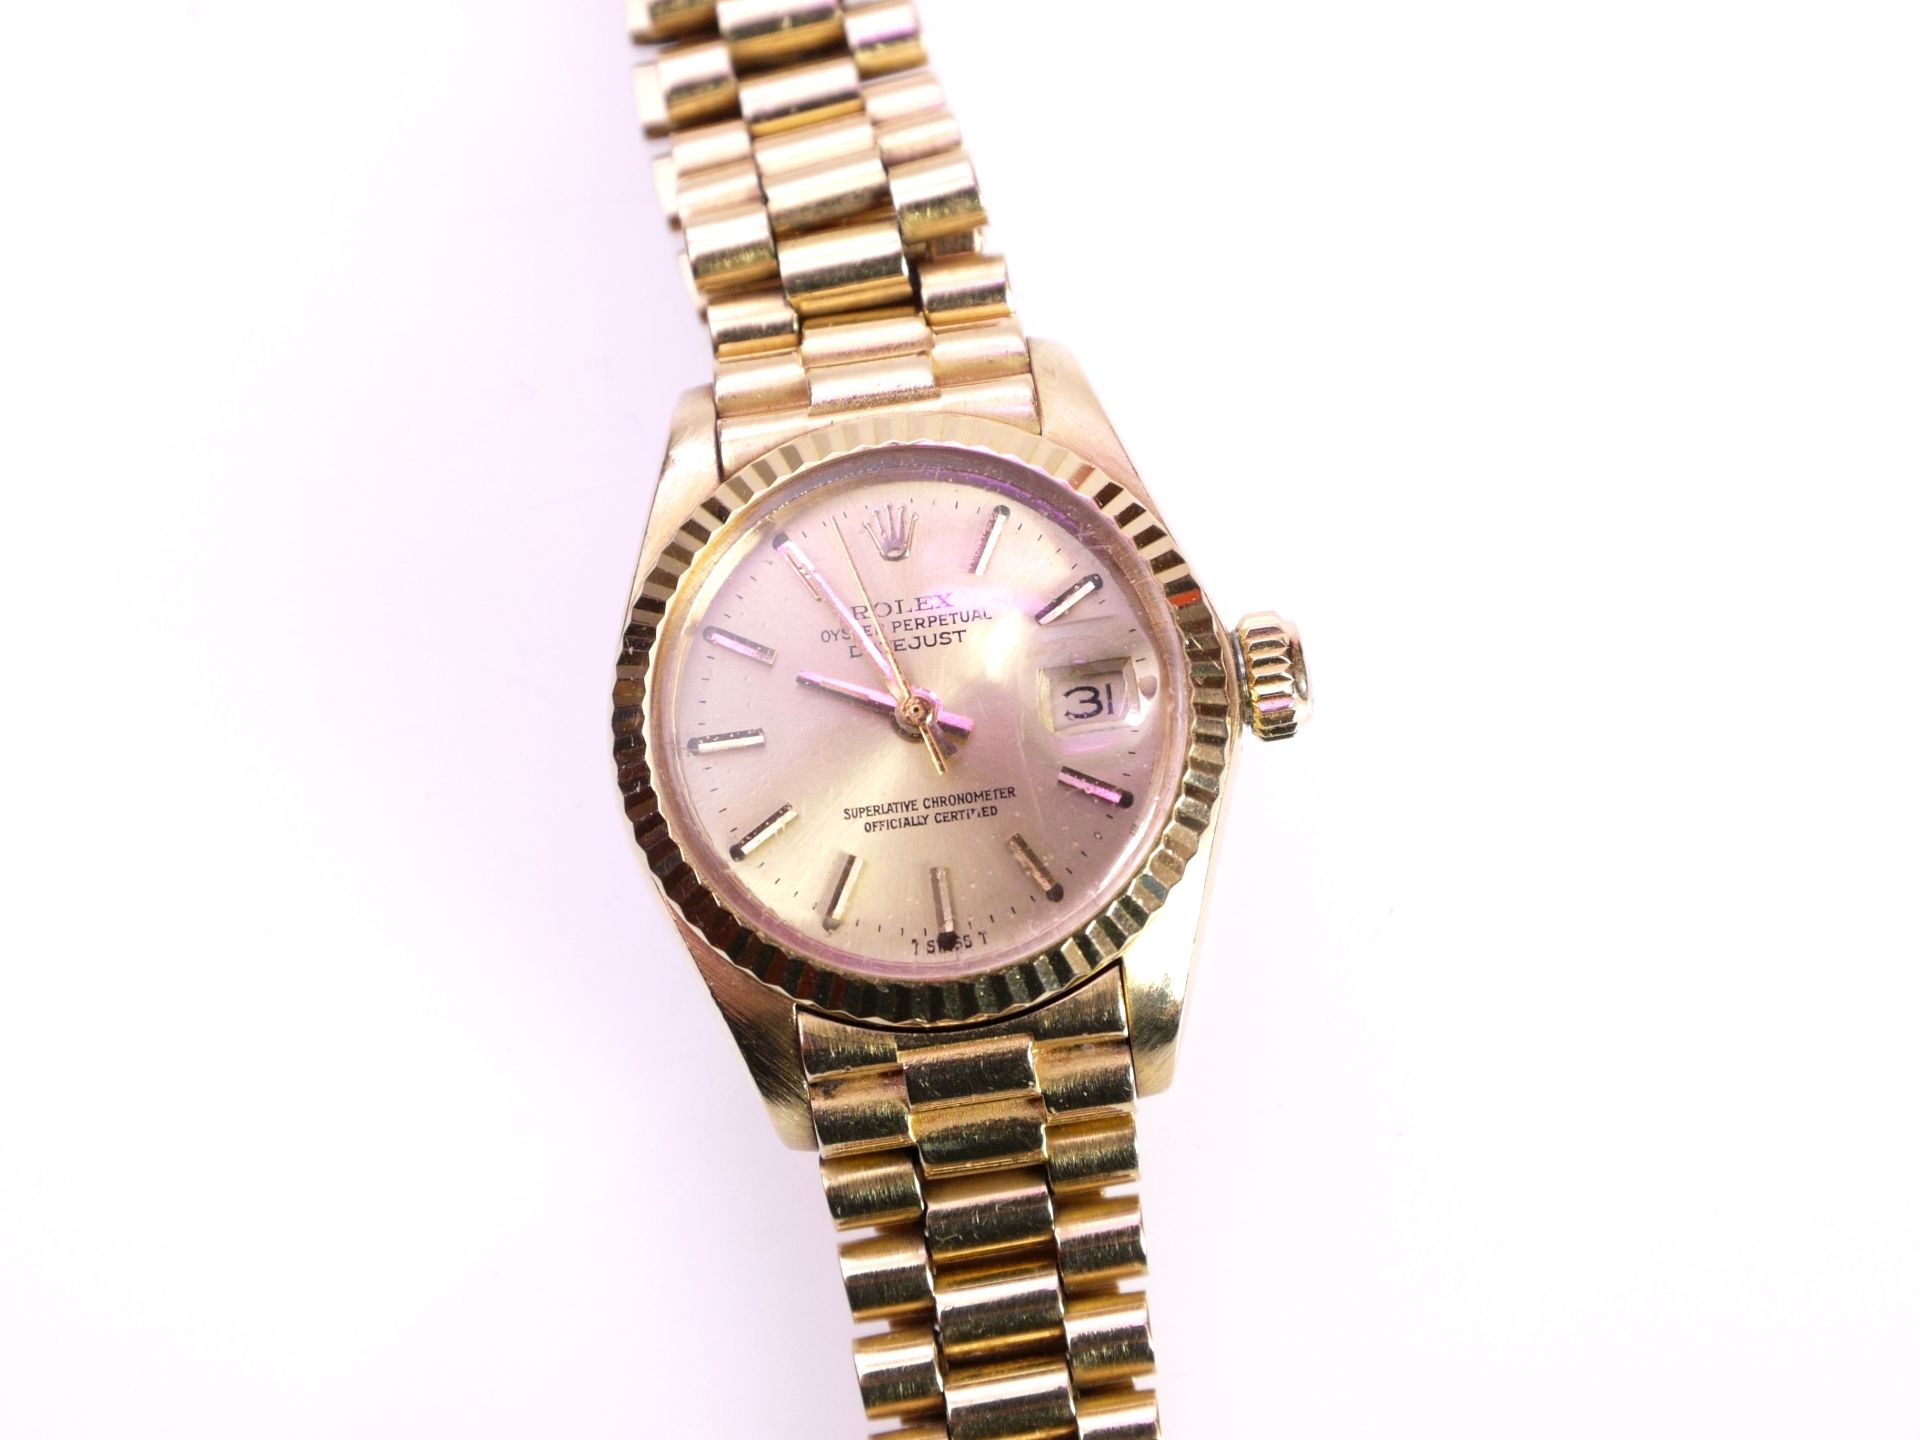 Rolex Oyster Perpetual Datejust Chronometer GG 18kt. Ref. 8570 - Bild 3 aus 10